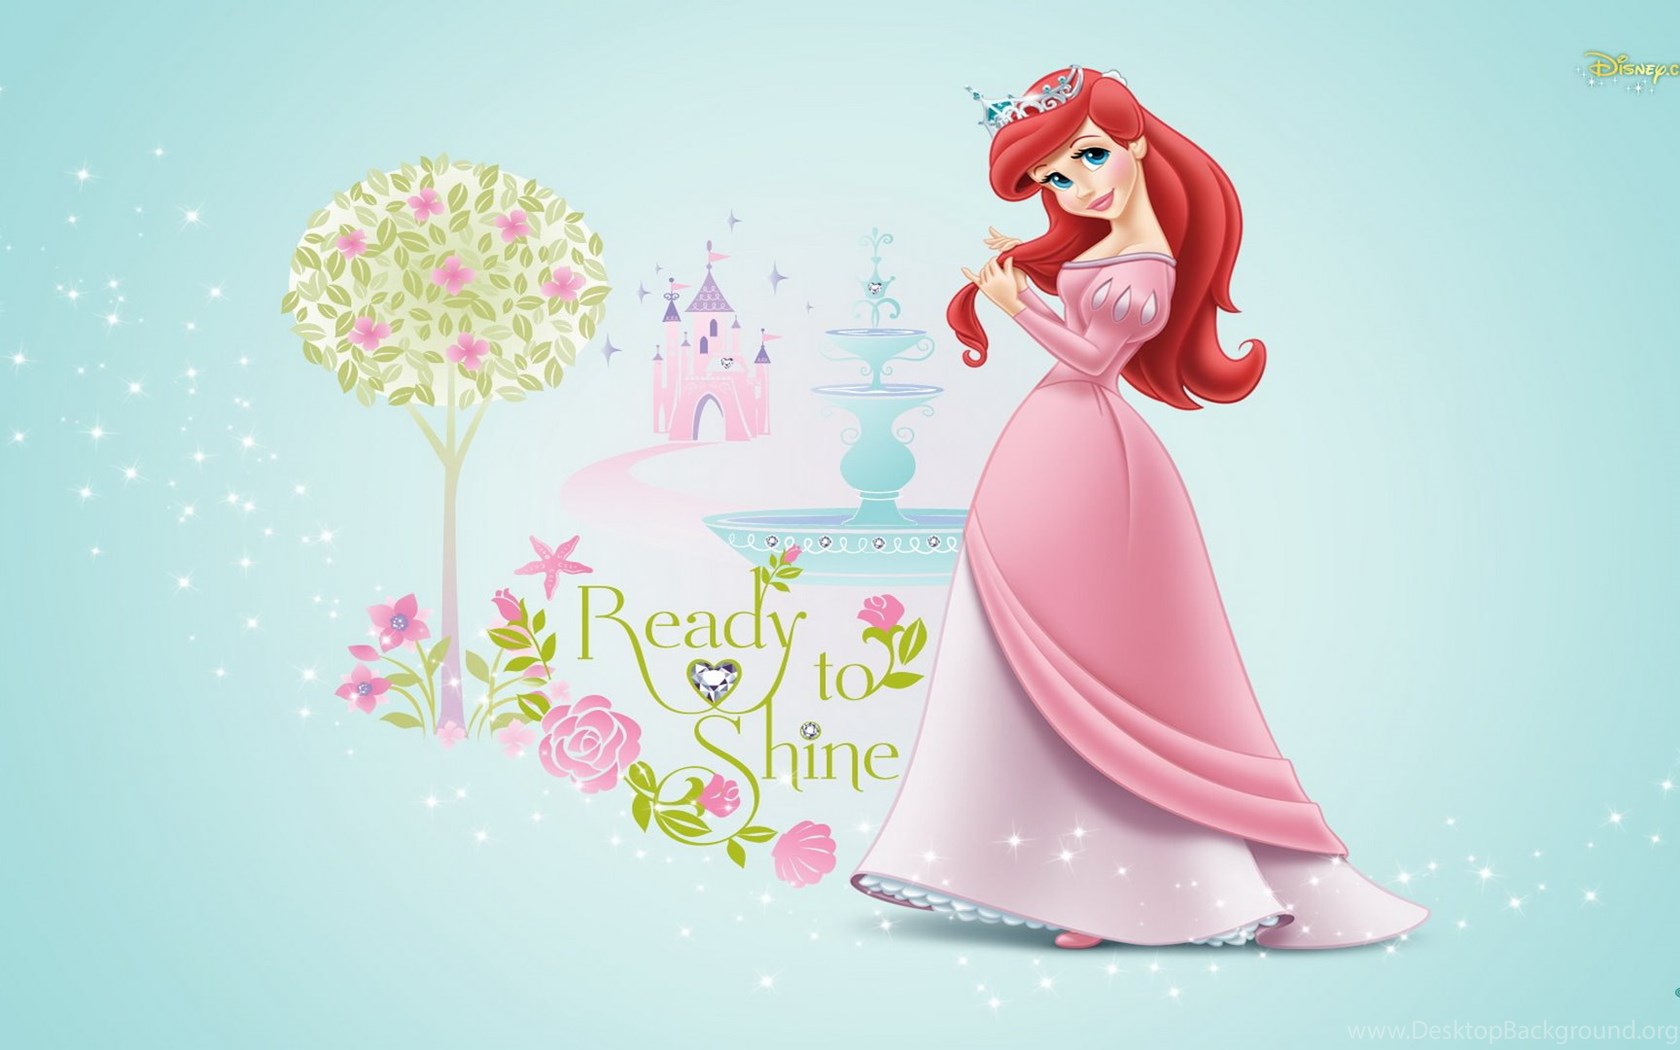 High Resolution Disney Princess Wallpapers Hd 1080p Full Size